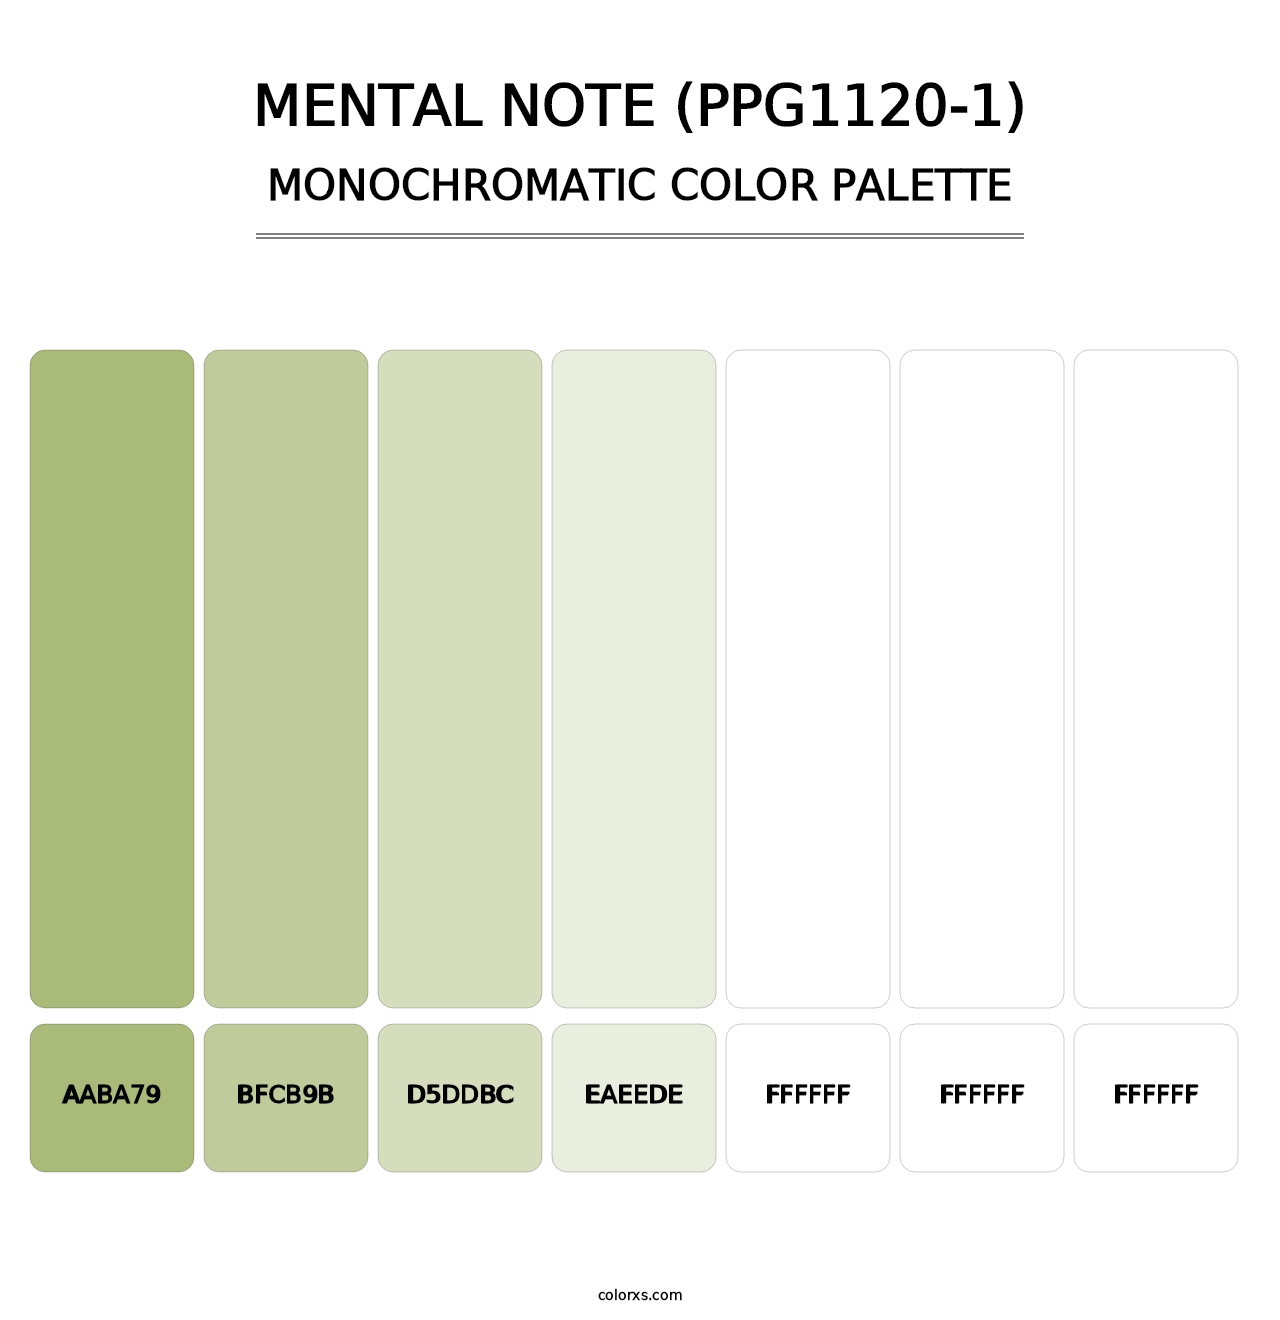 Mental Note (PPG1120-1) - Monochromatic Color Palette